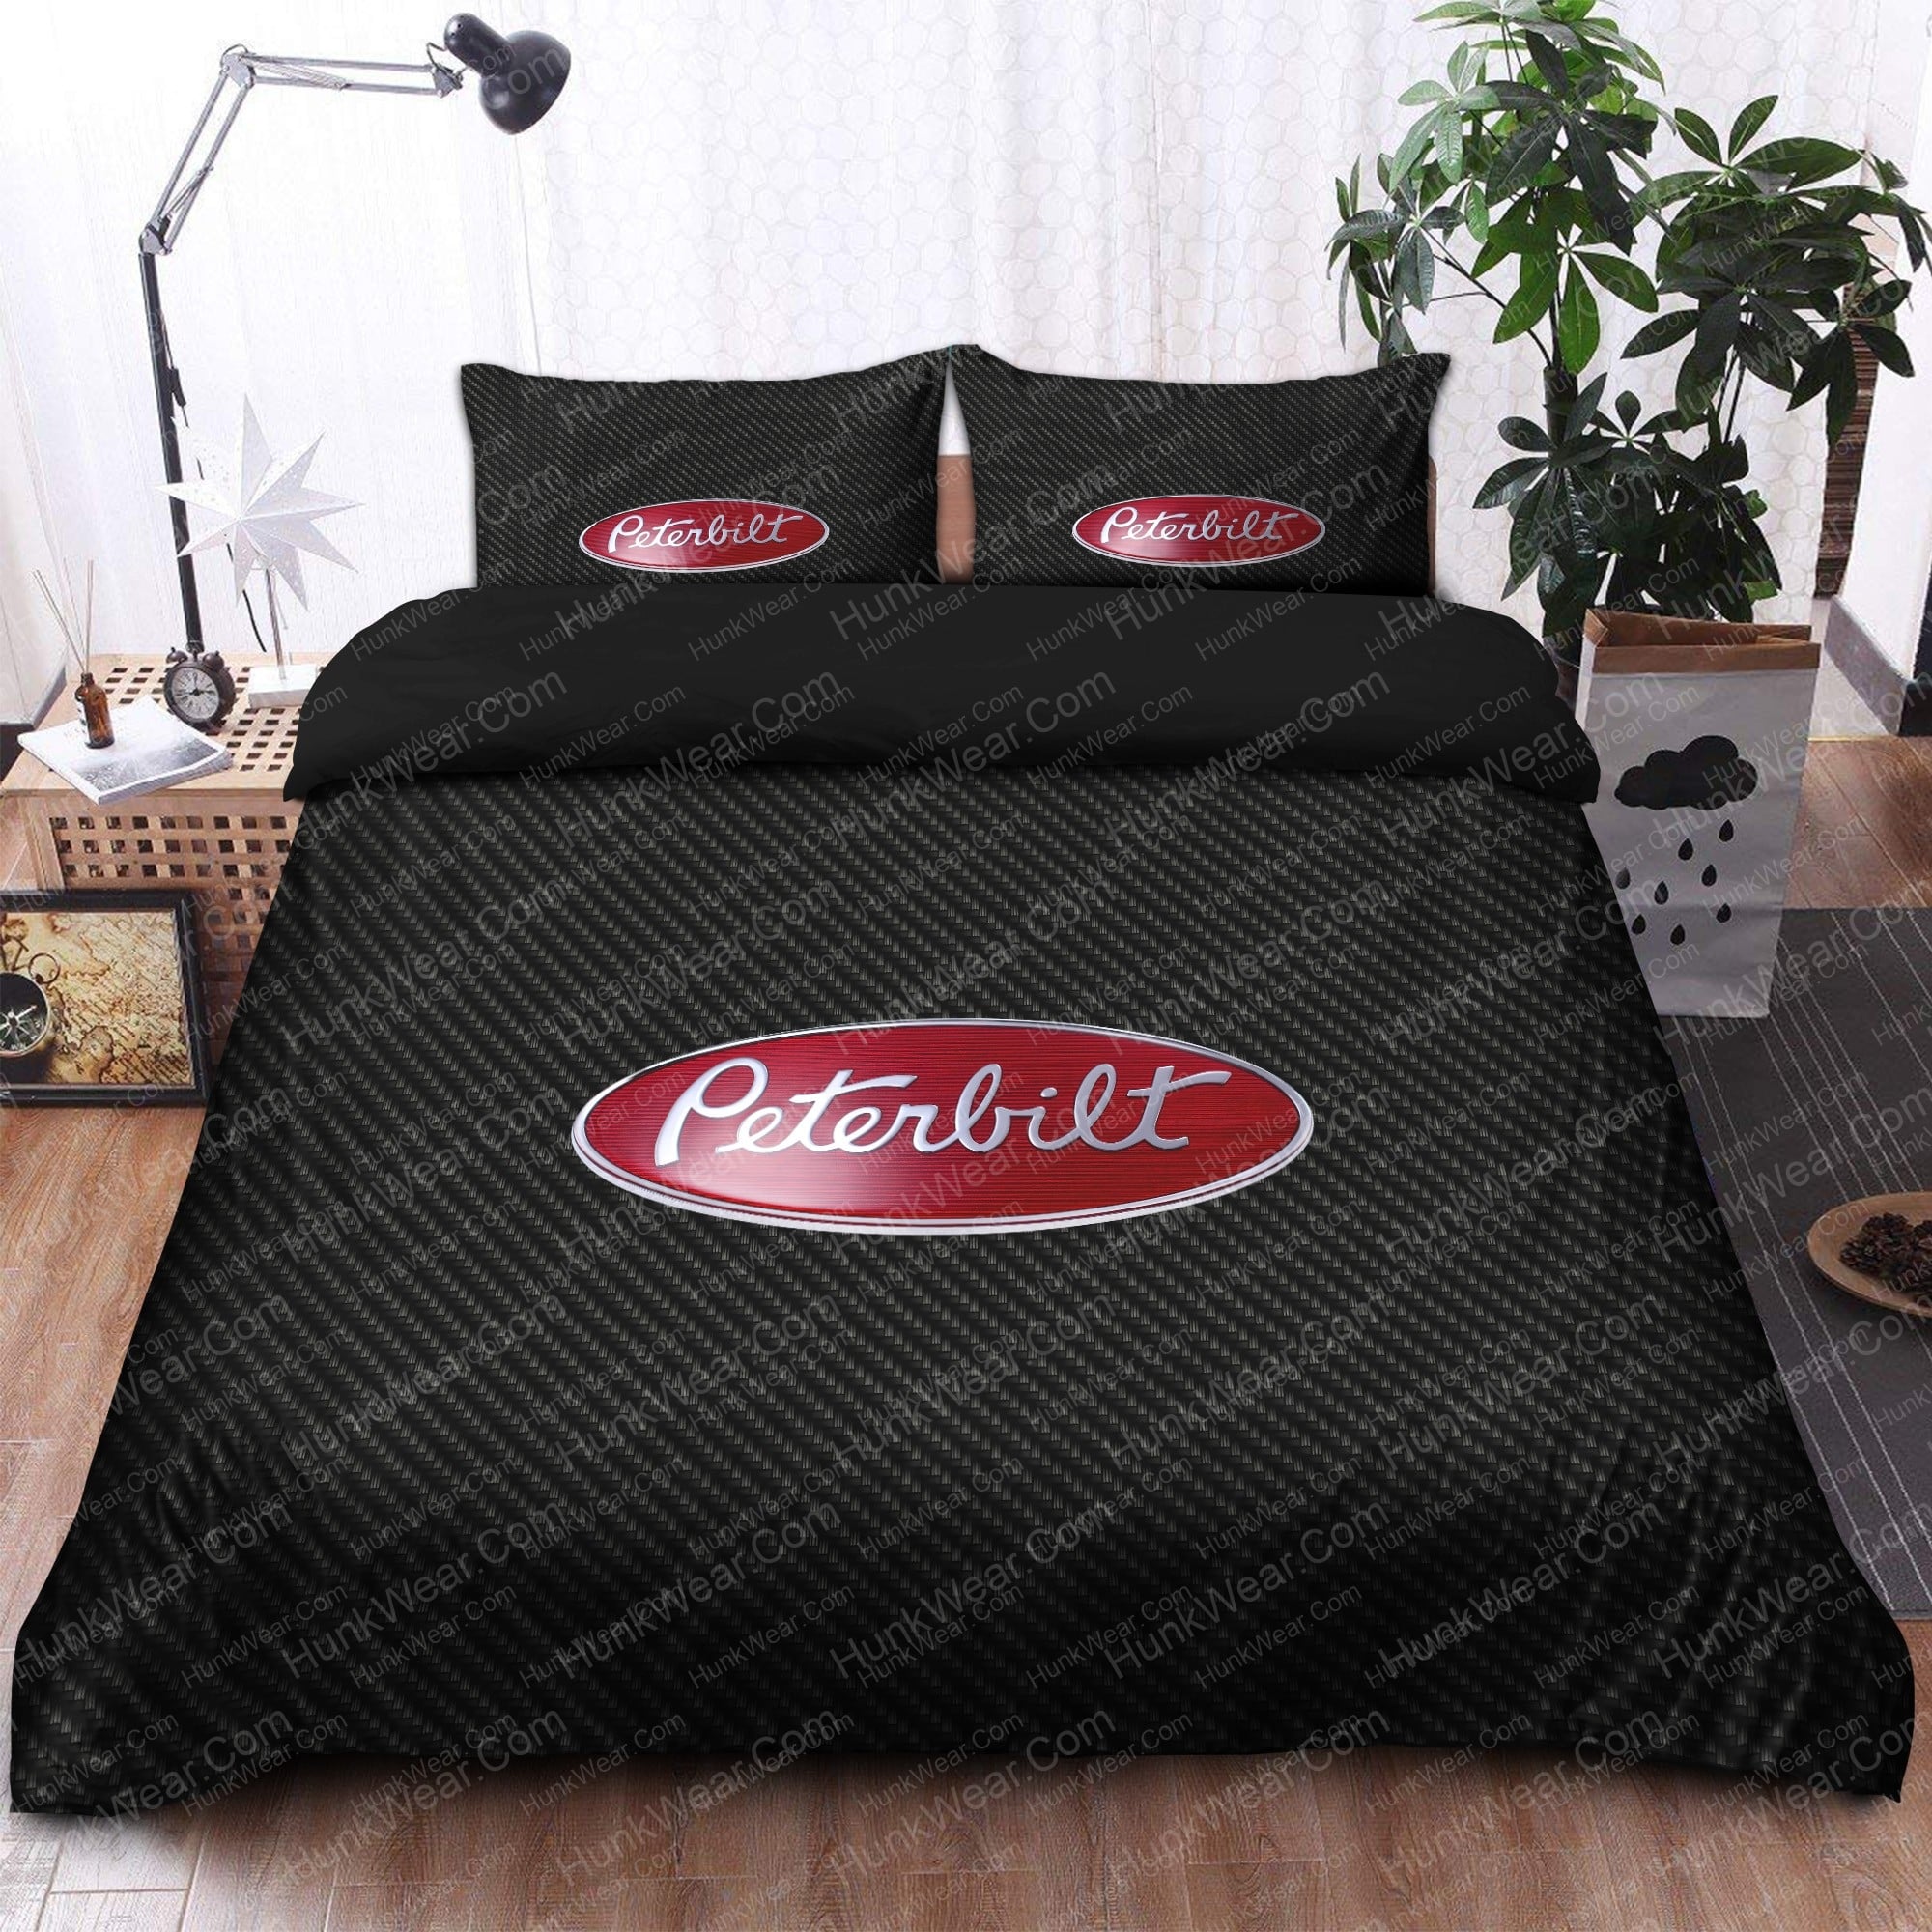 peterbilt bed set bedding set 2